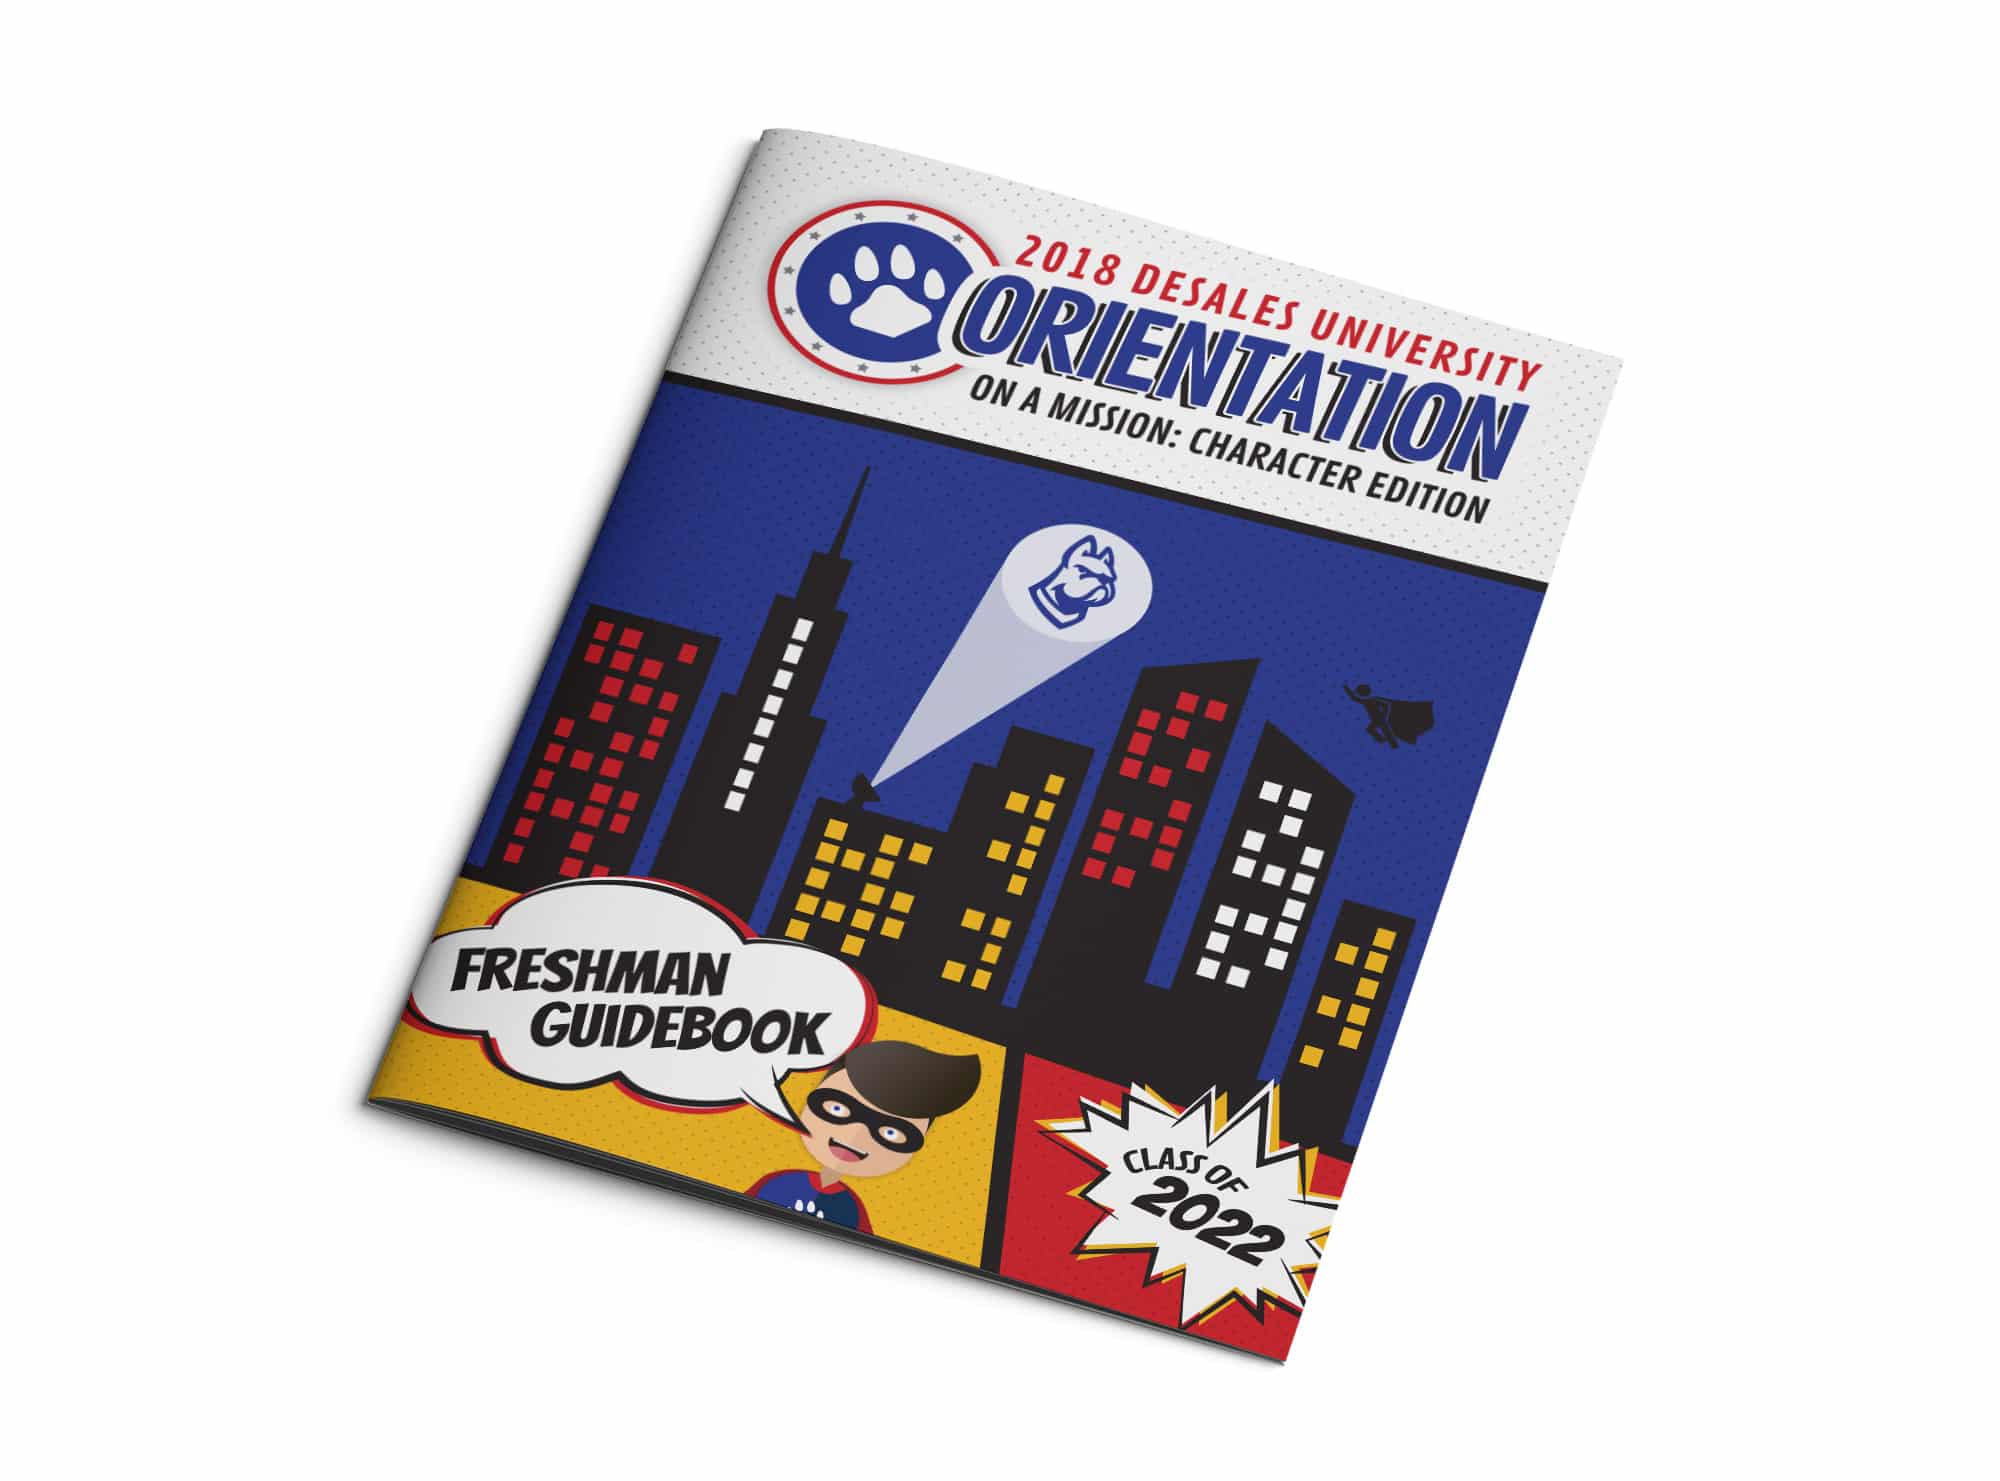 Desales University 2018 superhero-themed booklet design